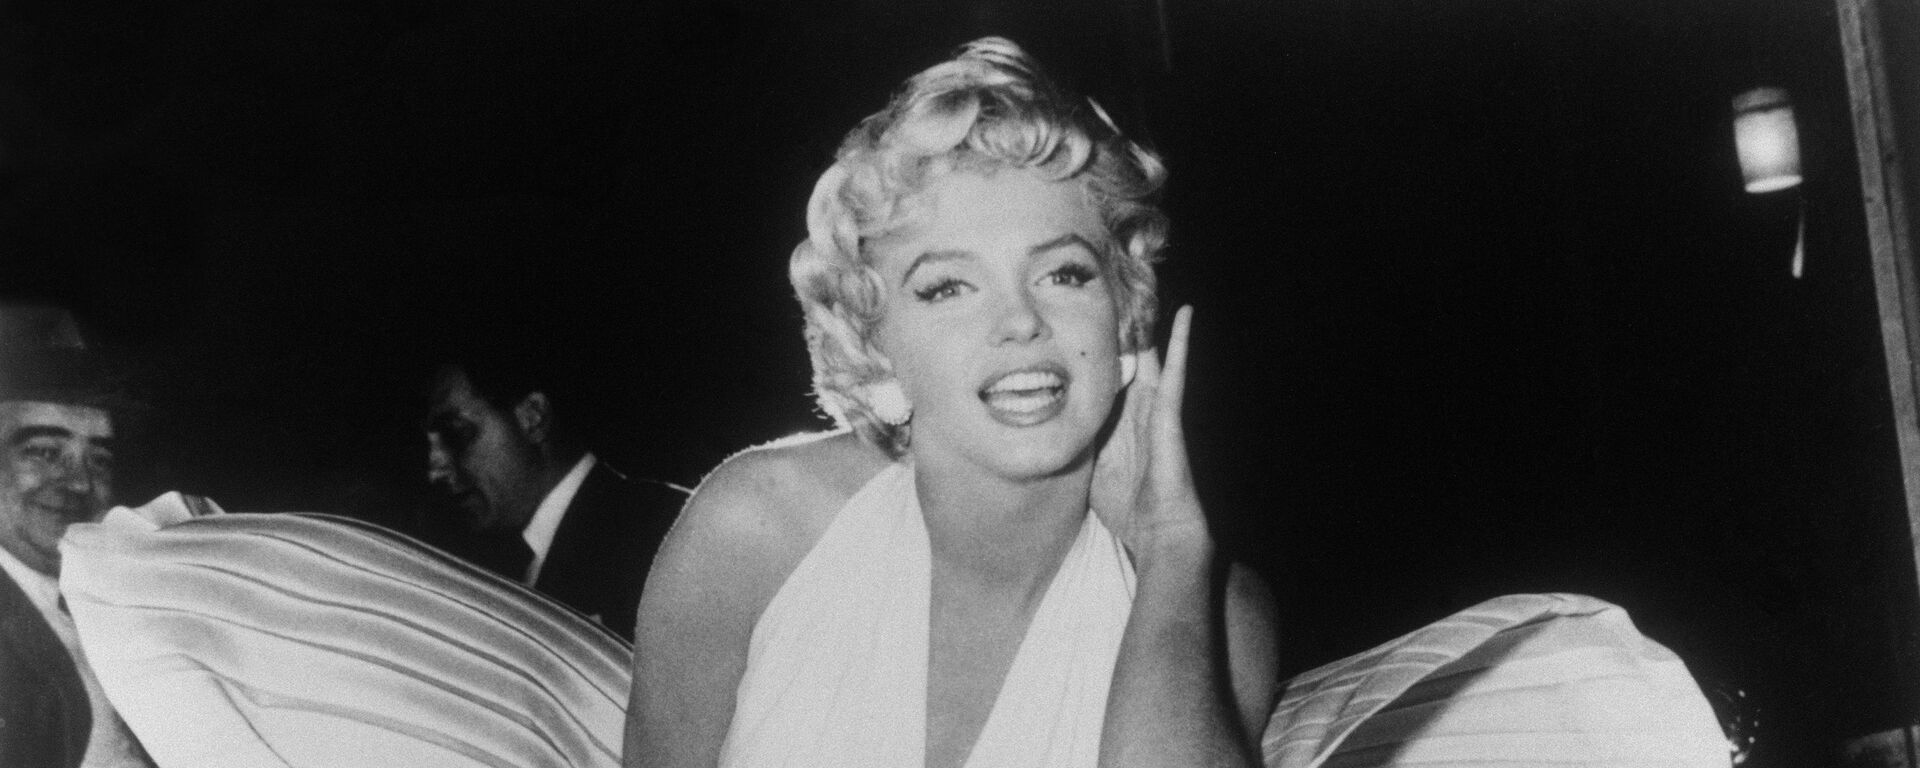 Marilyn Monroe, actriz estadounidense - Sputnik Mundo, 1920, 15.11.2020